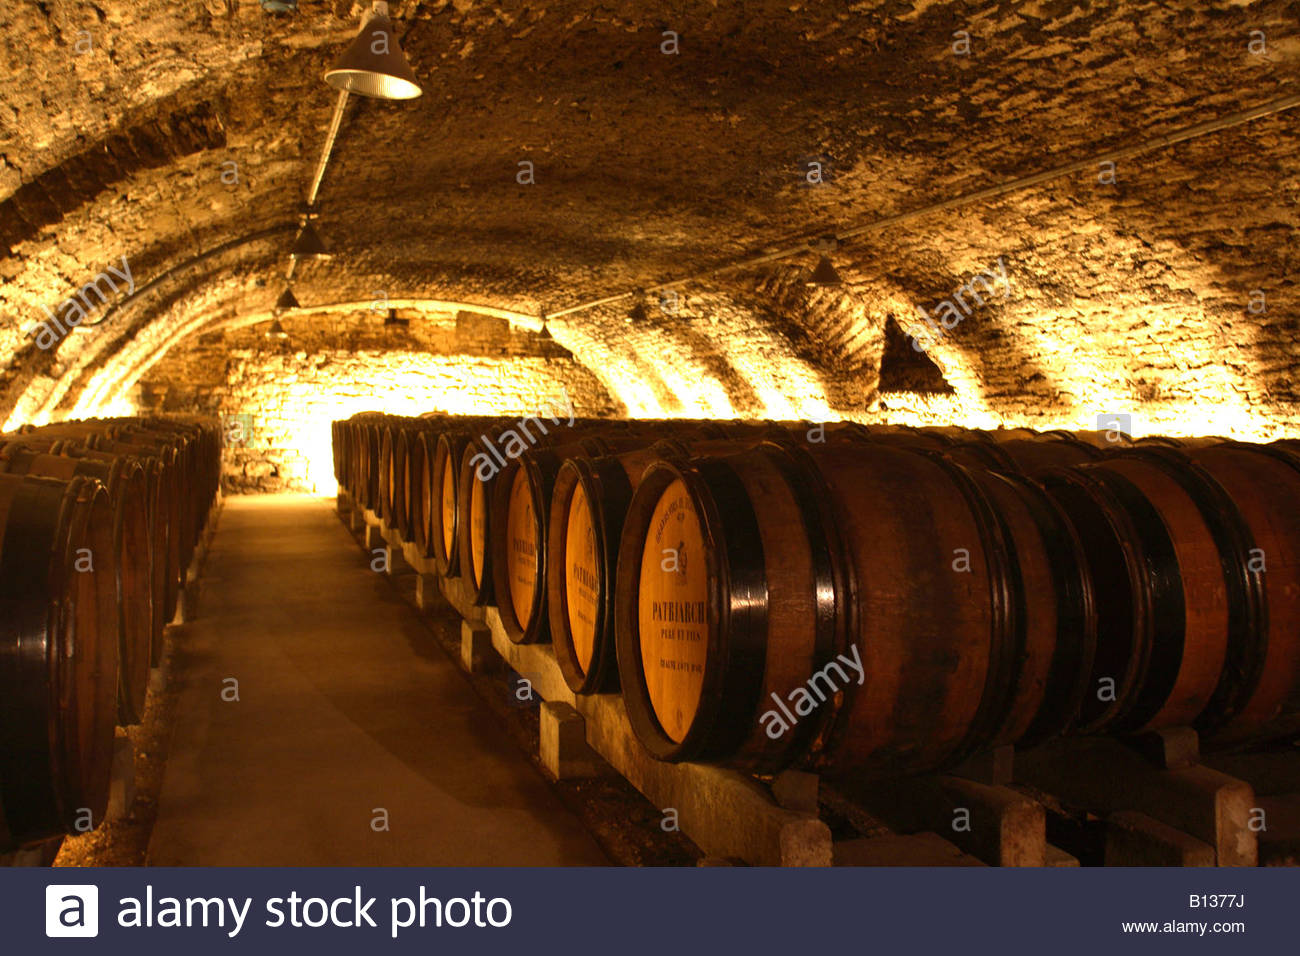 http://c8.alamy.com/comp/B1377J/cellar-of-patriarche-pere-et-fils-winery-beaune-burgundy-B1377J.jpg